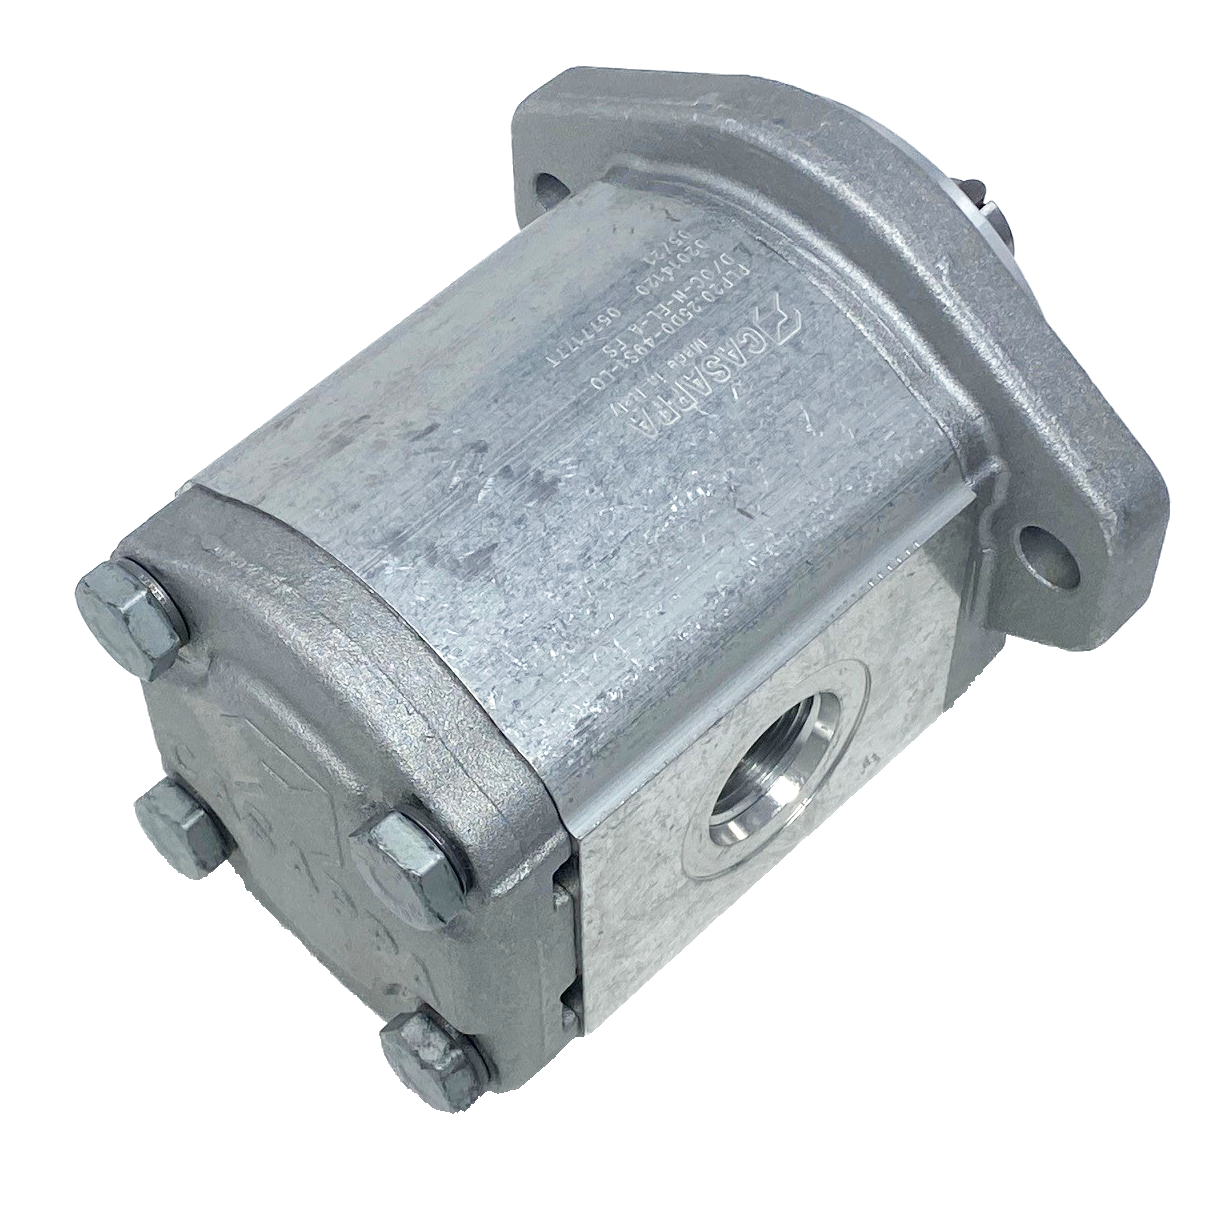 PLM20.31,5R0-50S1-LOC/OD-N-EL : Casappa Polaris Gear Motor, 33.03cc, 1885psi Rated, 2465RPM, Reversible Rear External Drain, 3/4" Bore x 3/16" Key Shaft, SAE A 2-Bolt Flange, 0.625 (5/8") #10 SAE Inlet, 0.75 (3/4") #12 SAE Outlet, Aluminum Body & Flange